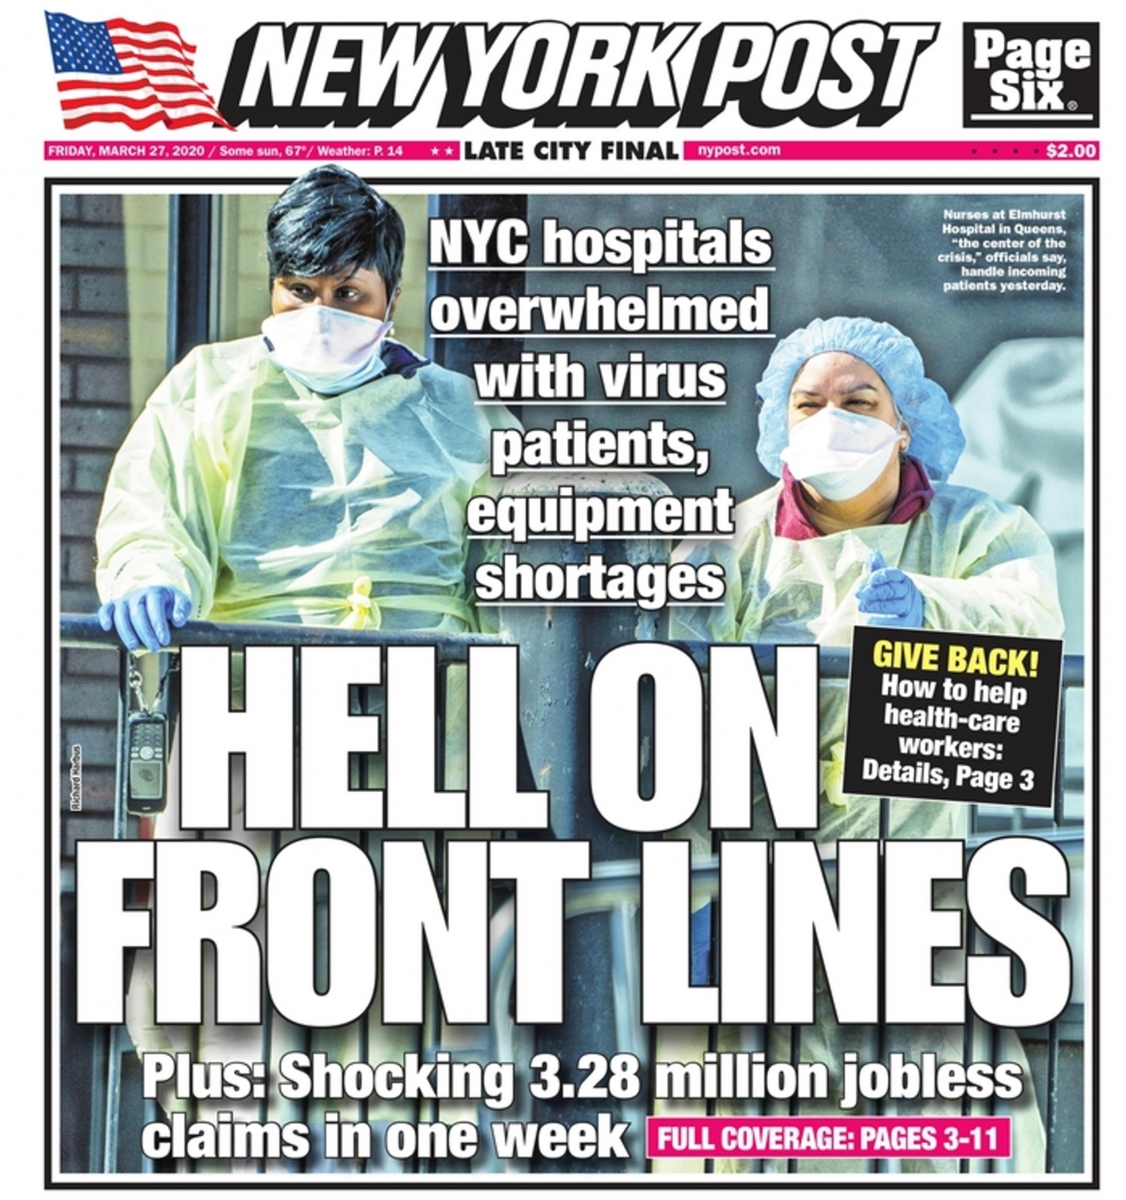 New York Post Newspaper. NYC hospitals overwhelmed with virus patients, equipment shortages (CORONAVIRUS 27-03-2020)